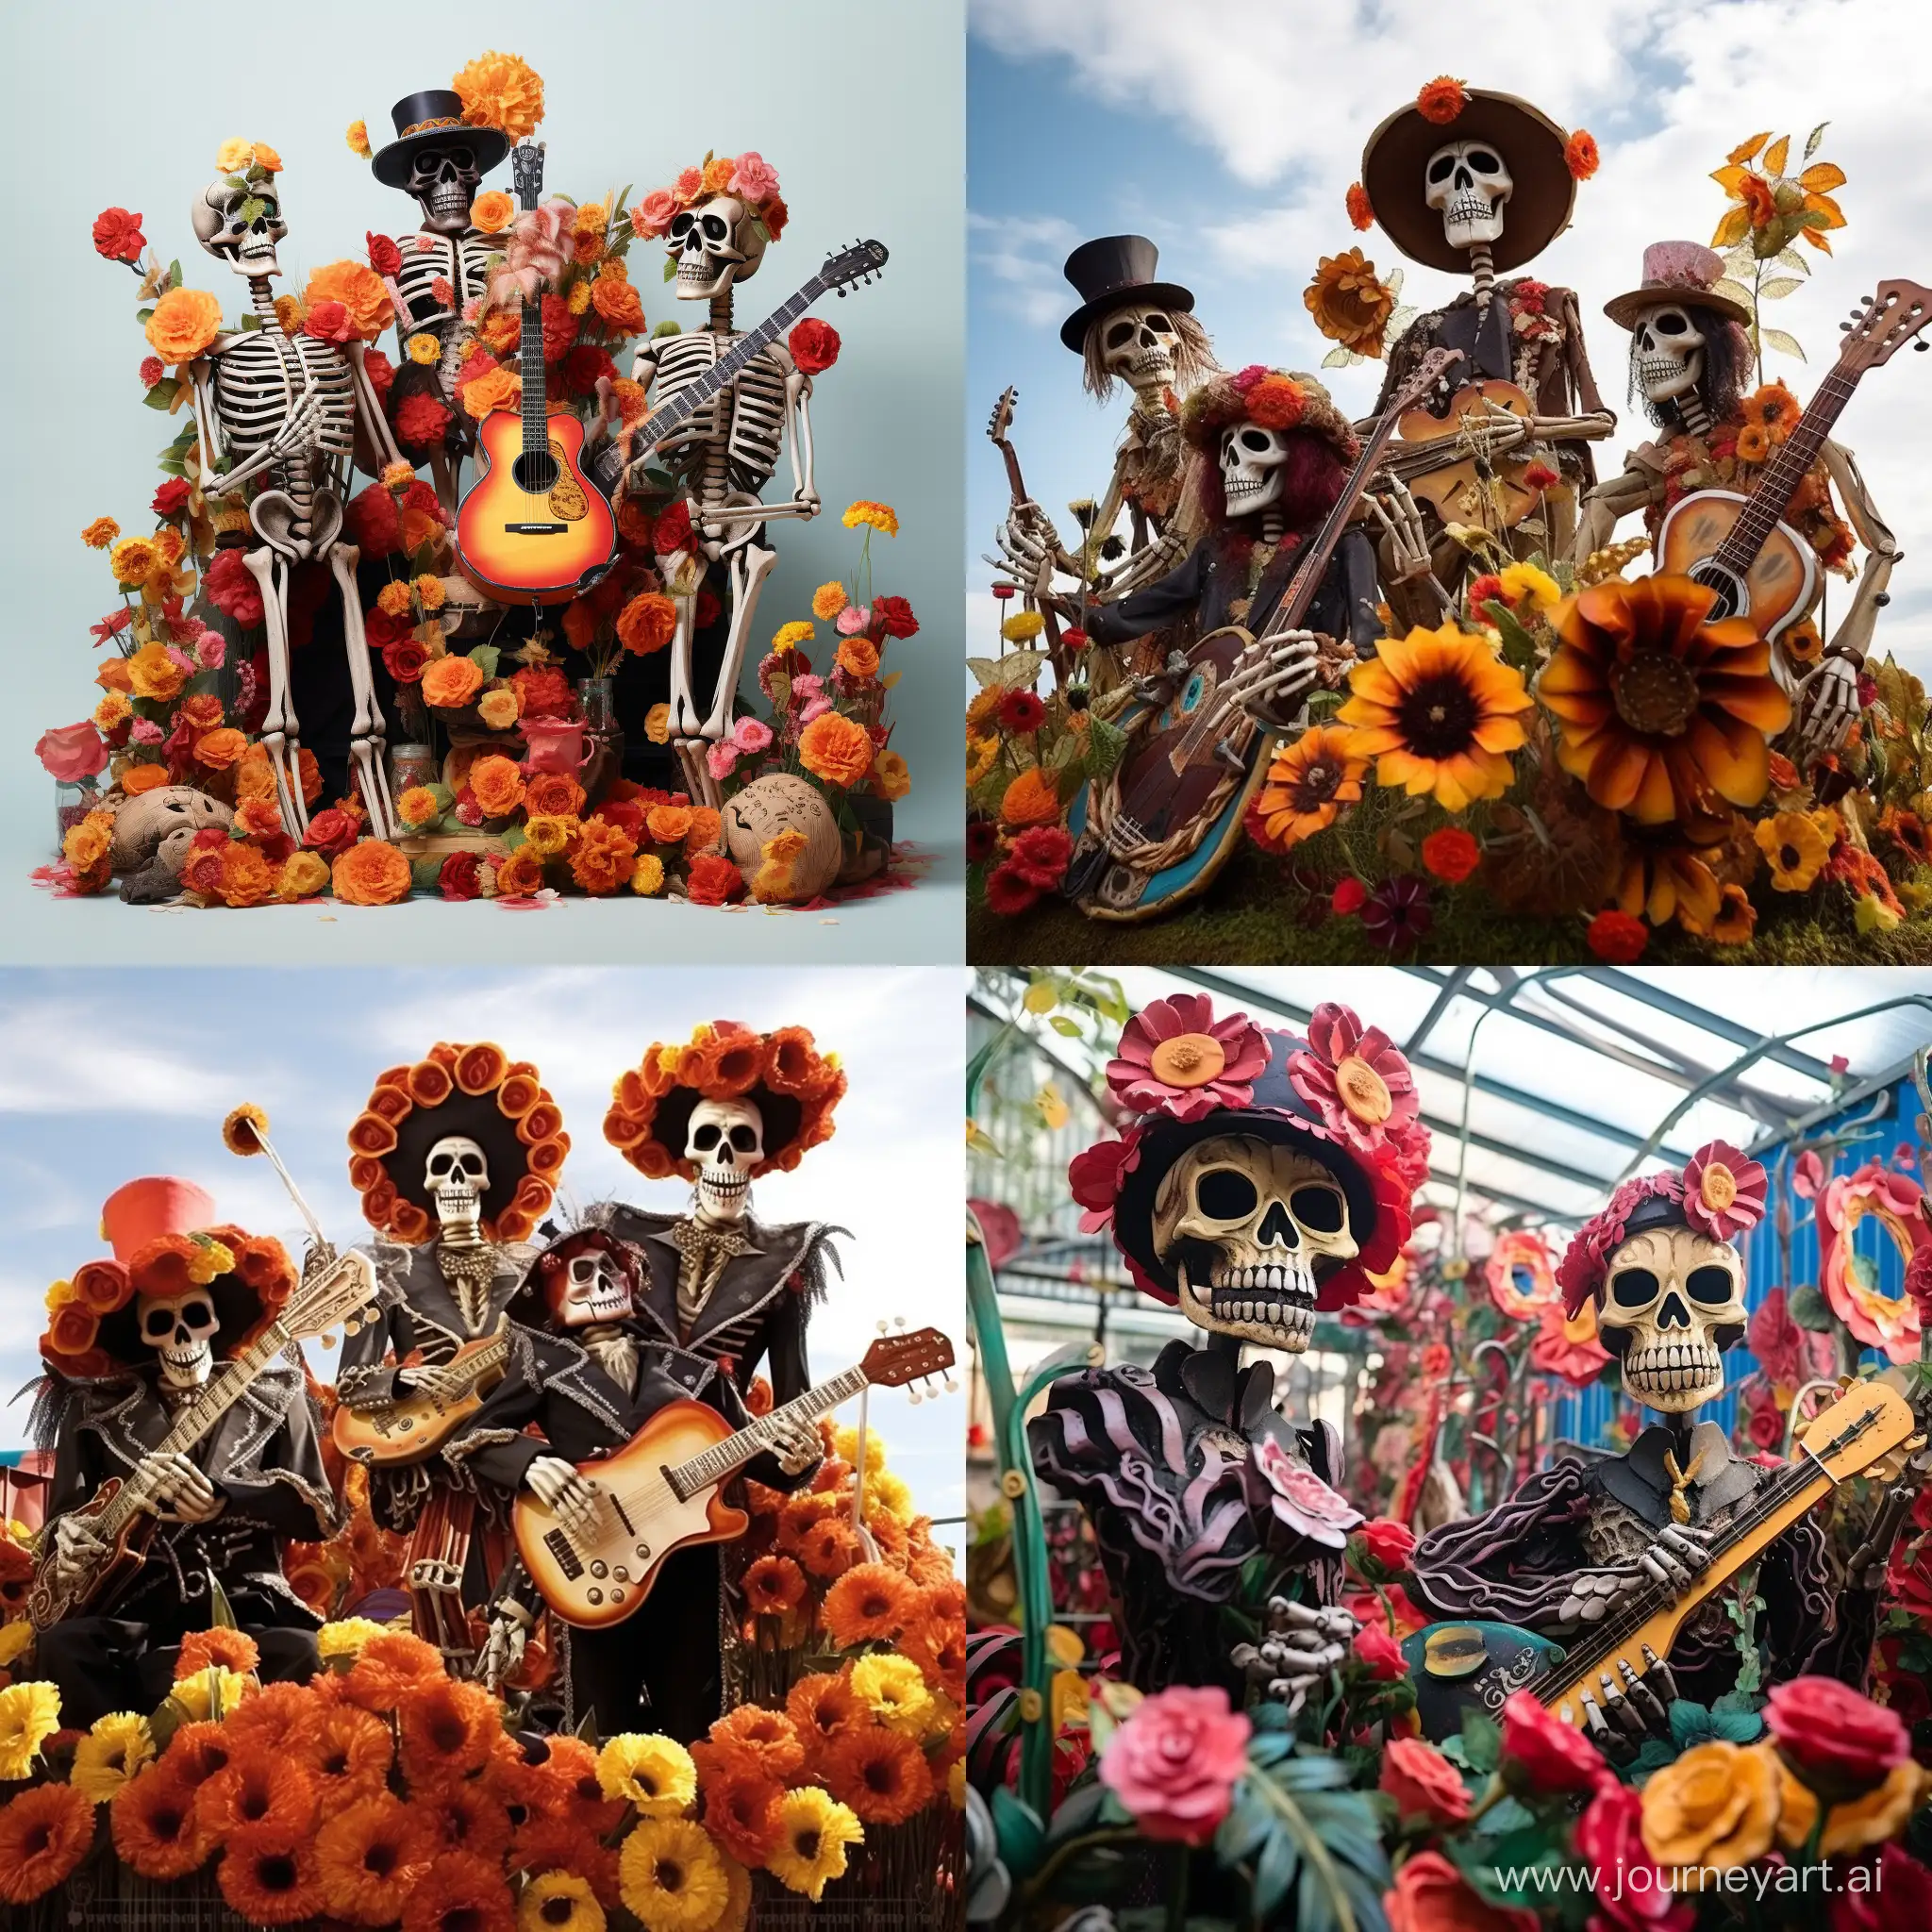 Eerie-Symphony-Skeleton-Music-Band-on-Haunting-Flower-Parade-Float